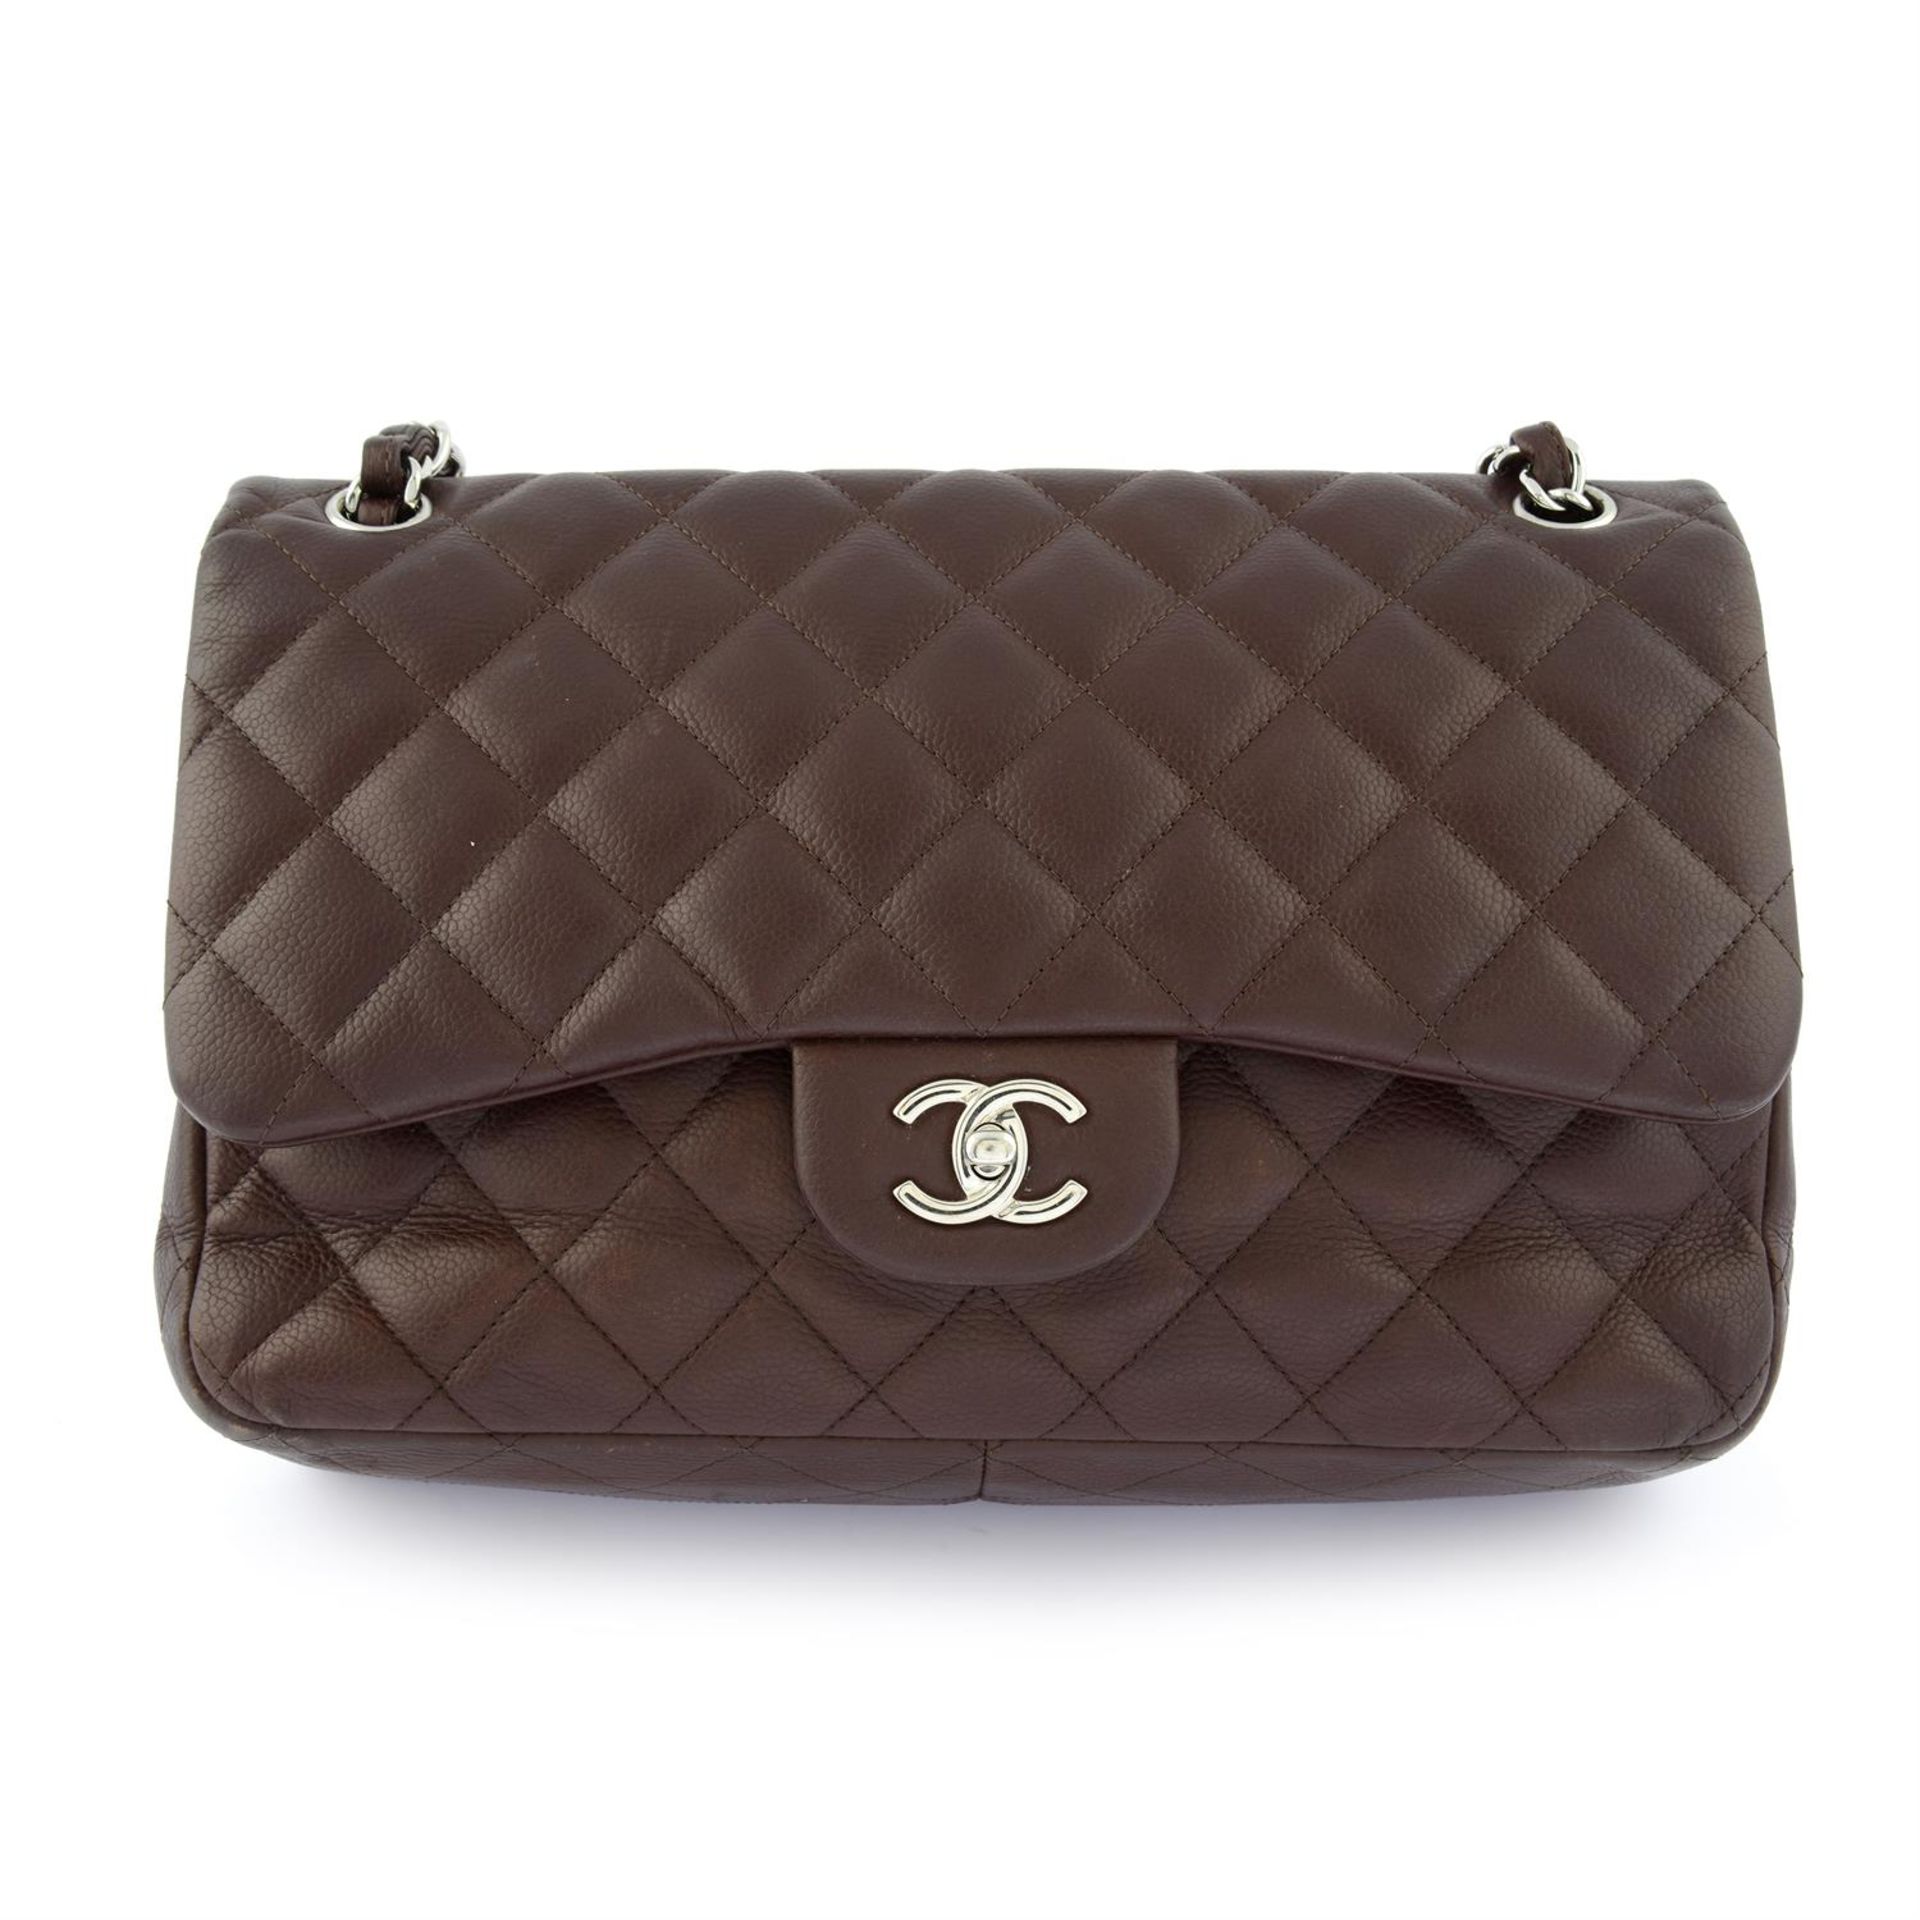 CHANEL - a burgundy caviar leather double flap classic handbag.